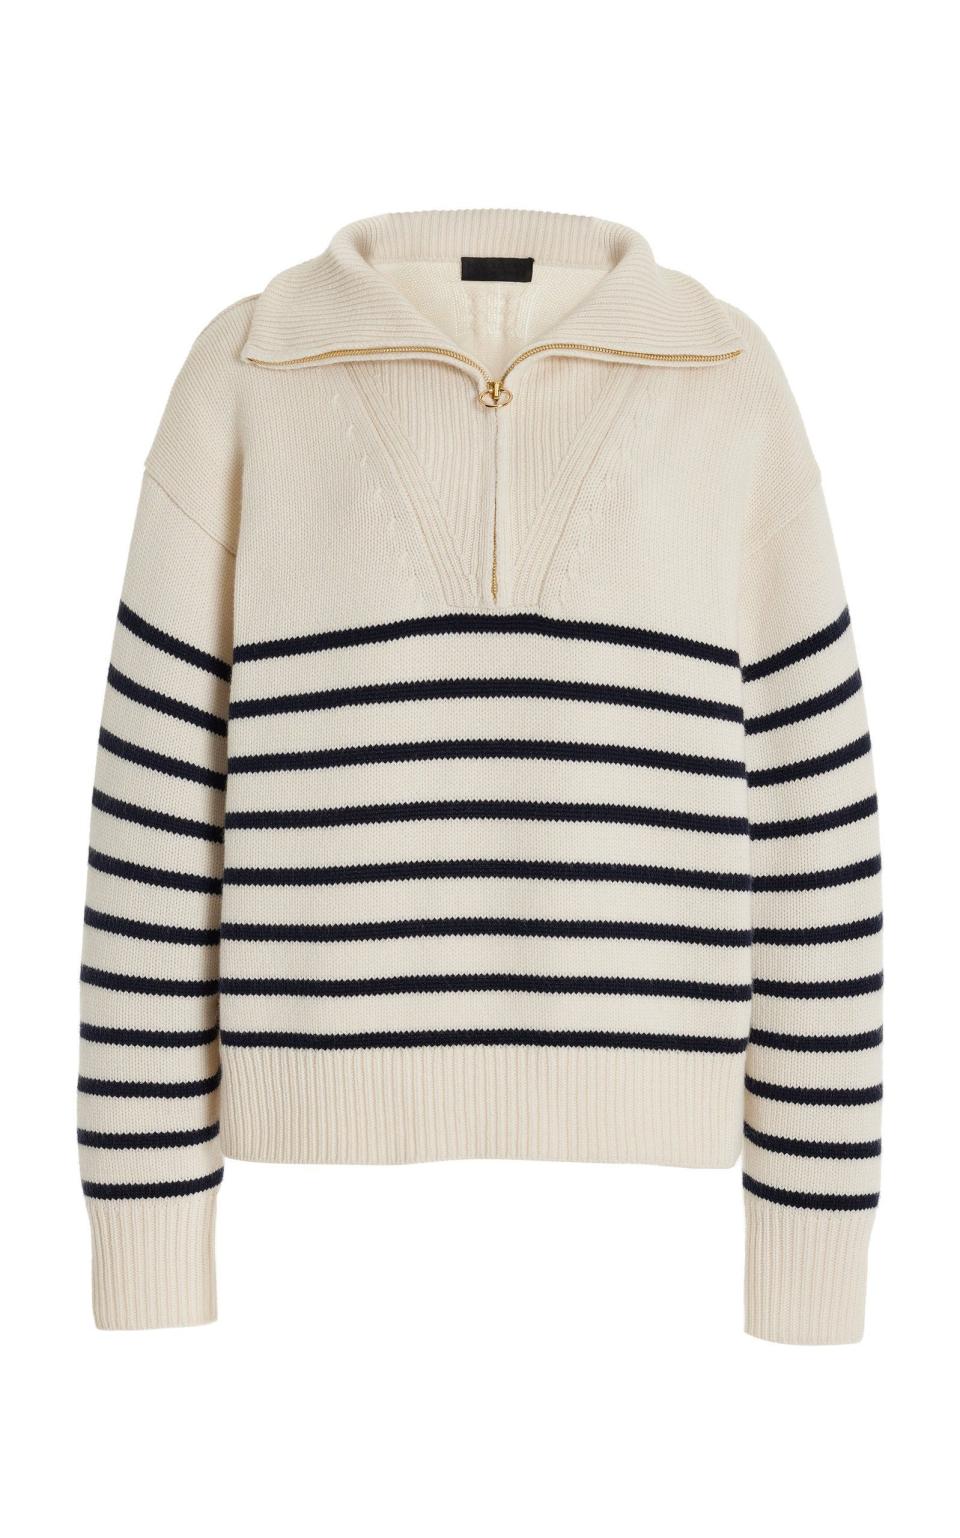 11) Hester Striped Cashmere Half-Zip Sweater